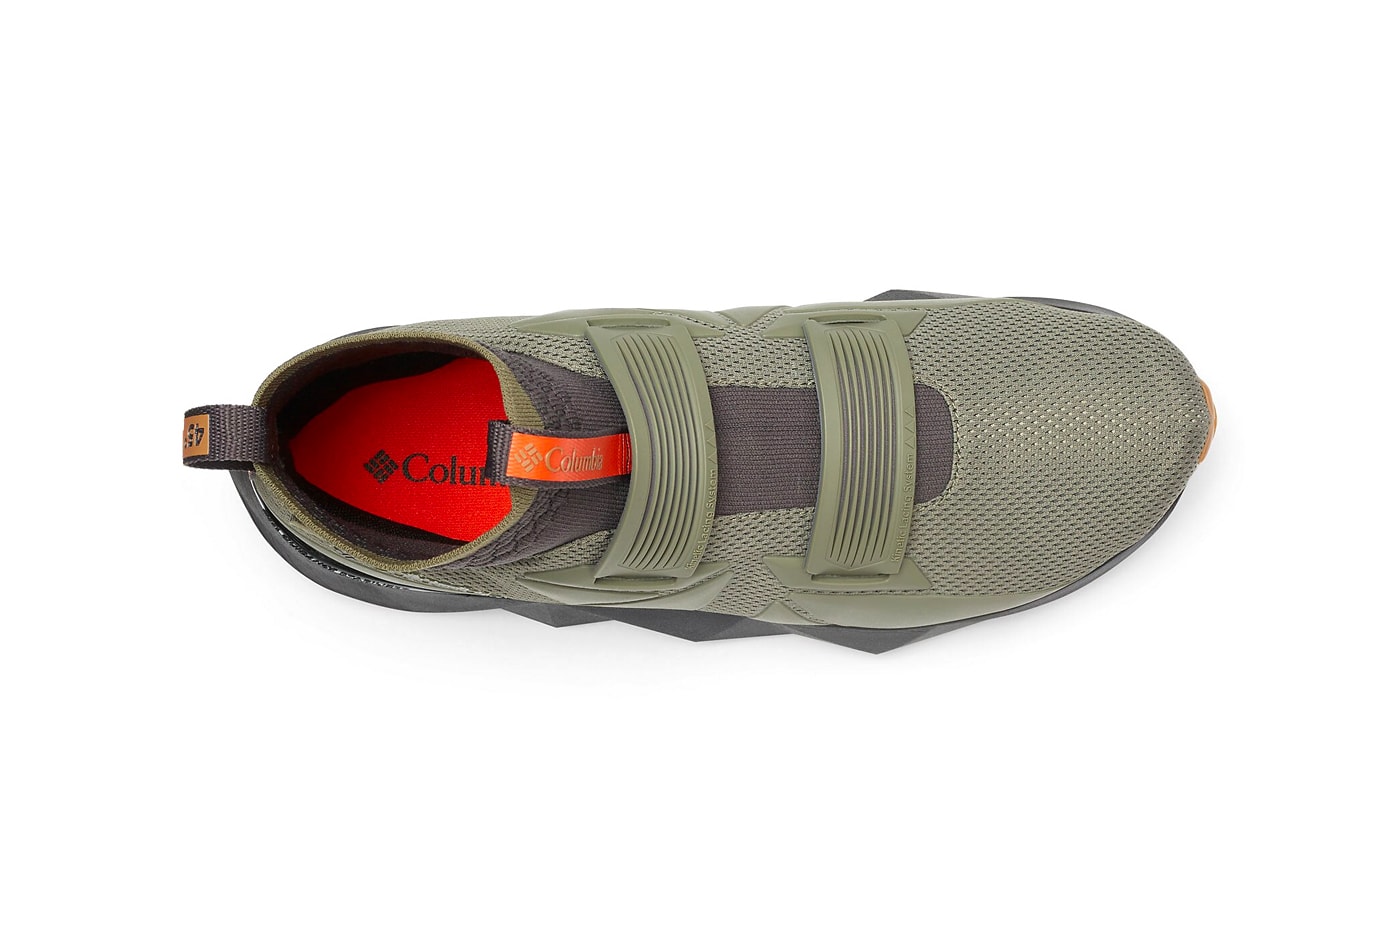 Facet™ 45 OutDry™ Technical Hiking Sneaker Columbia Facet 45 OutDry trail shoes sneakers hiking outdoors waterproof omni grip